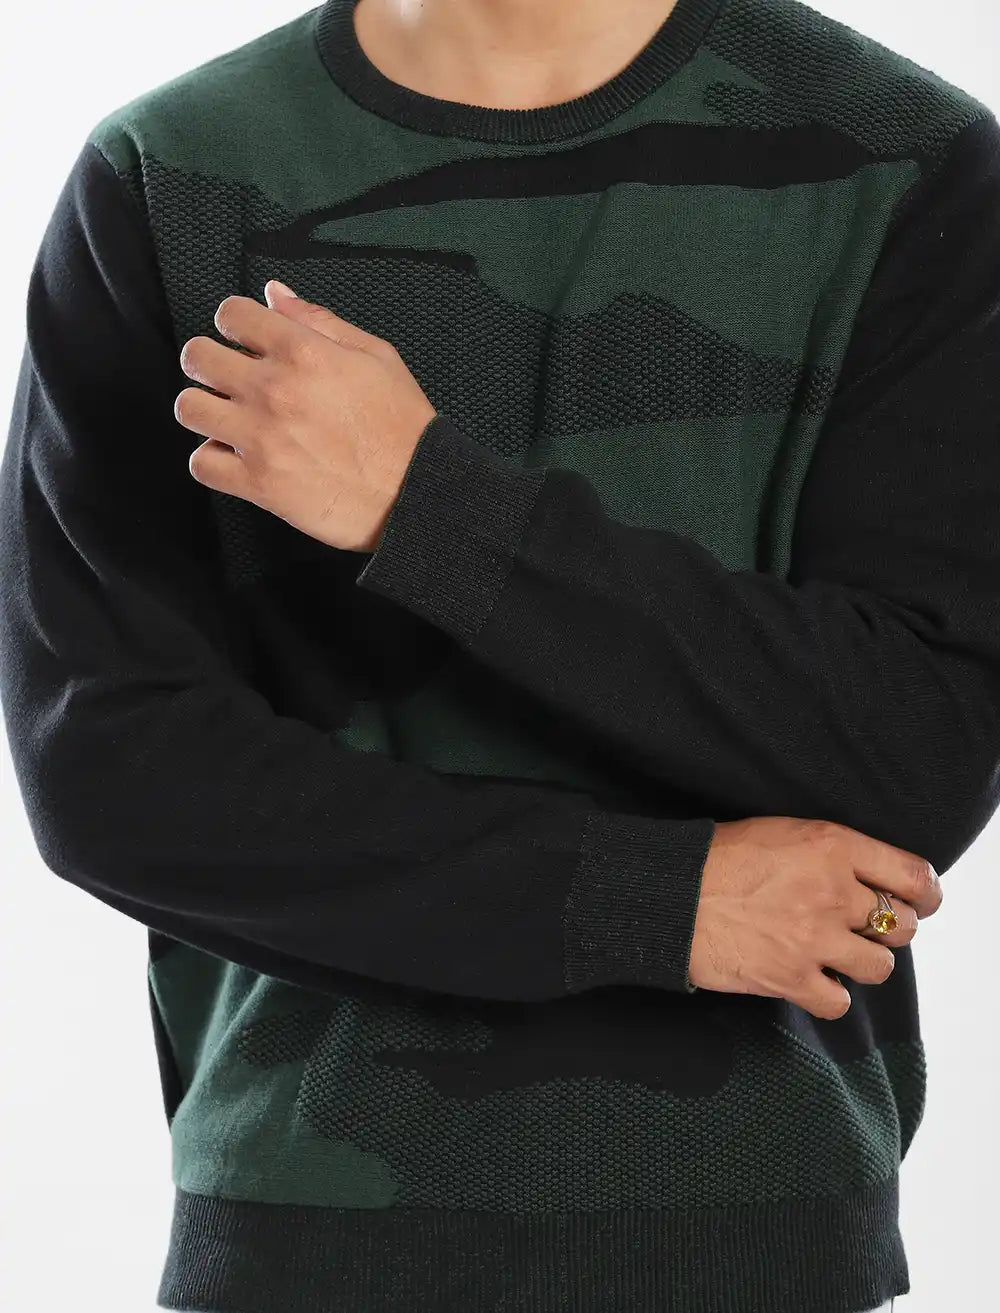 Camo Sweater